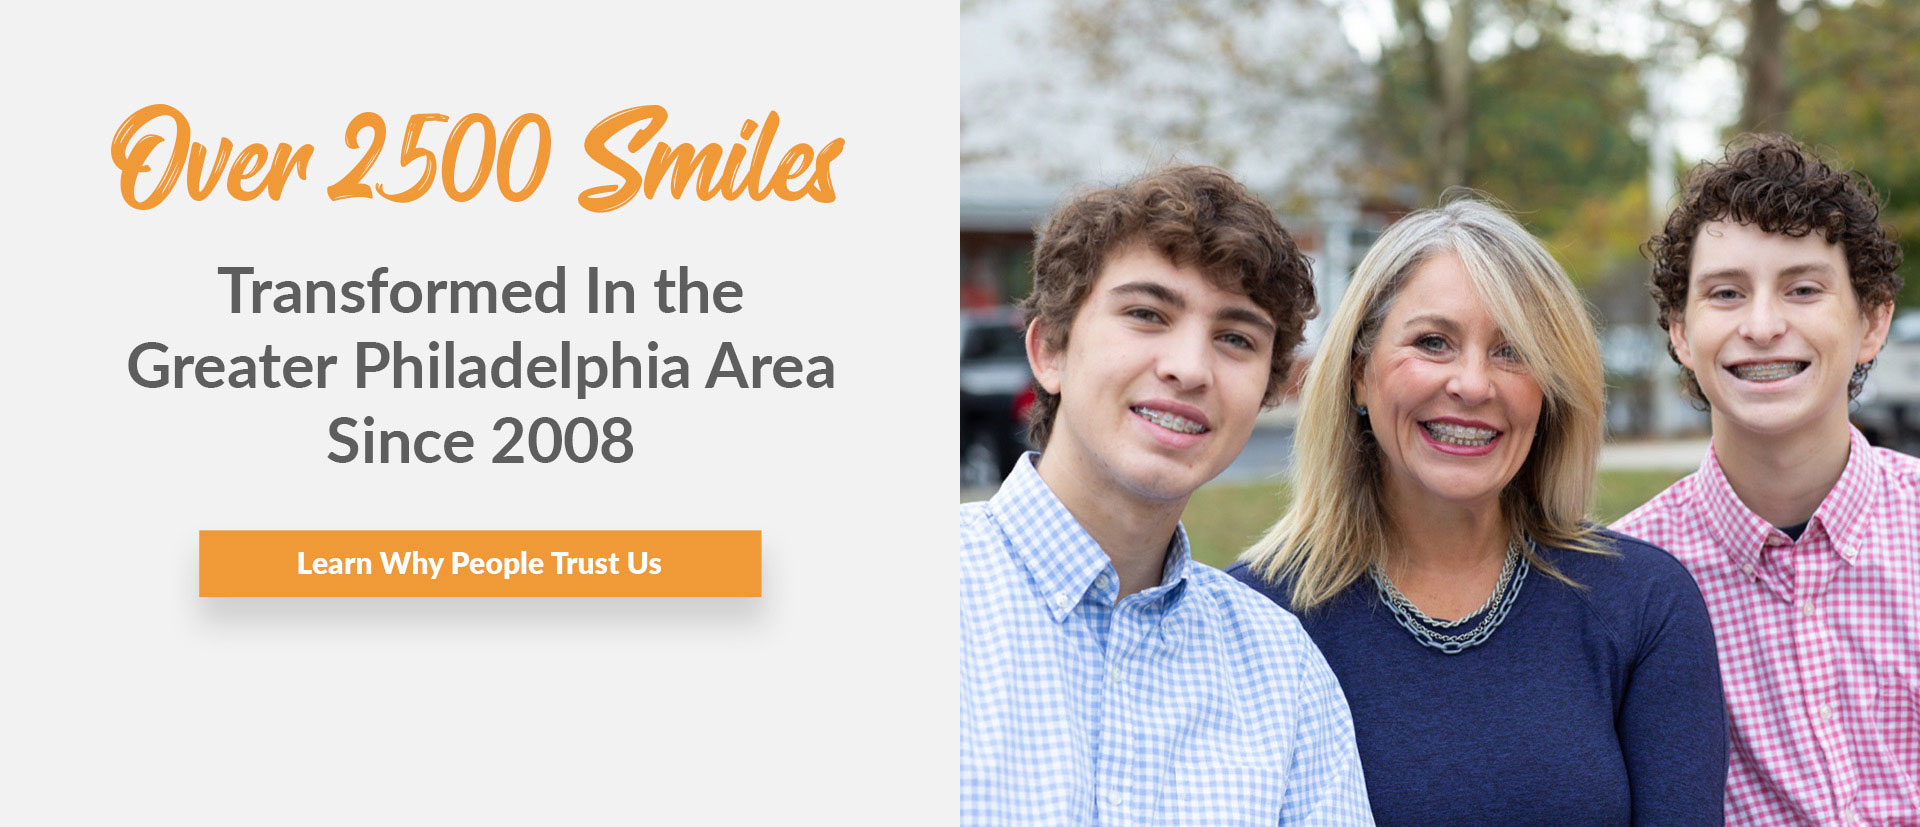 learn why people trust tamburrino family orthodontics